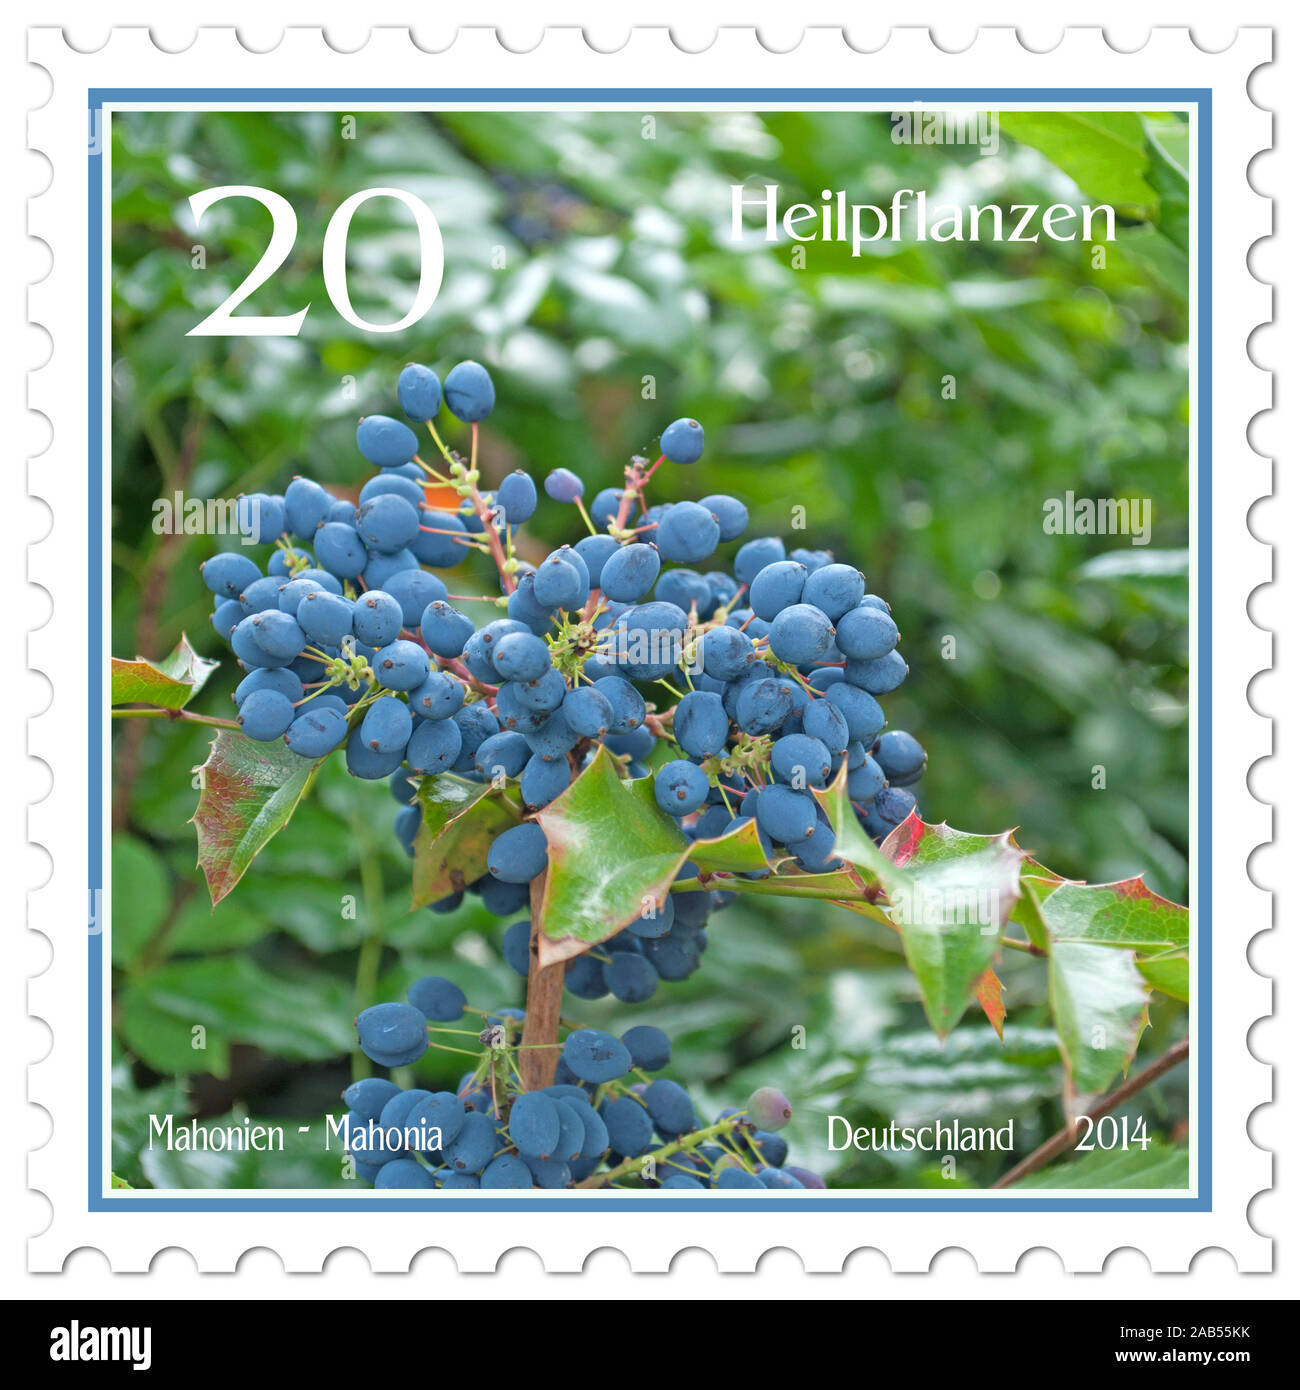 Postage stamp with the image of ripe fruits of the mahonia, Mahonia aquifolium Stock Photo